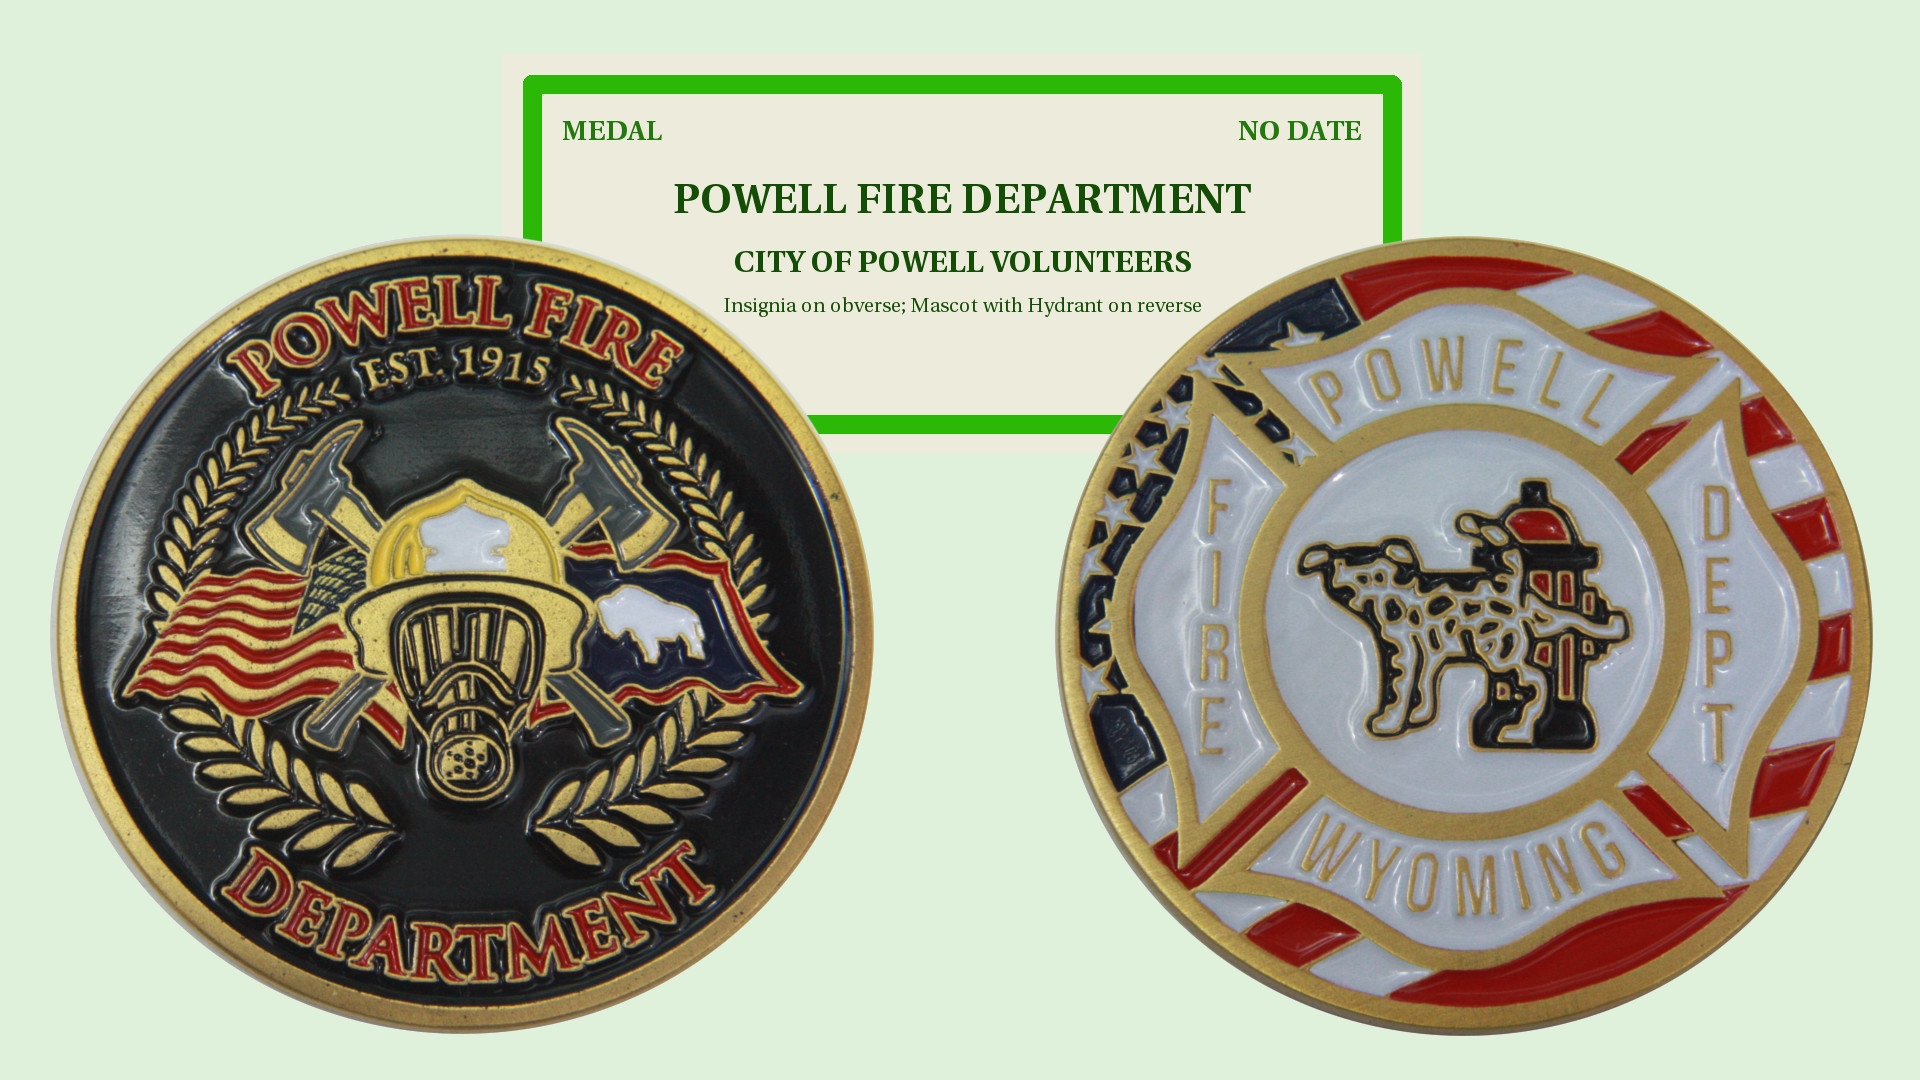 MEDAL - Powell Fire Department.jpg